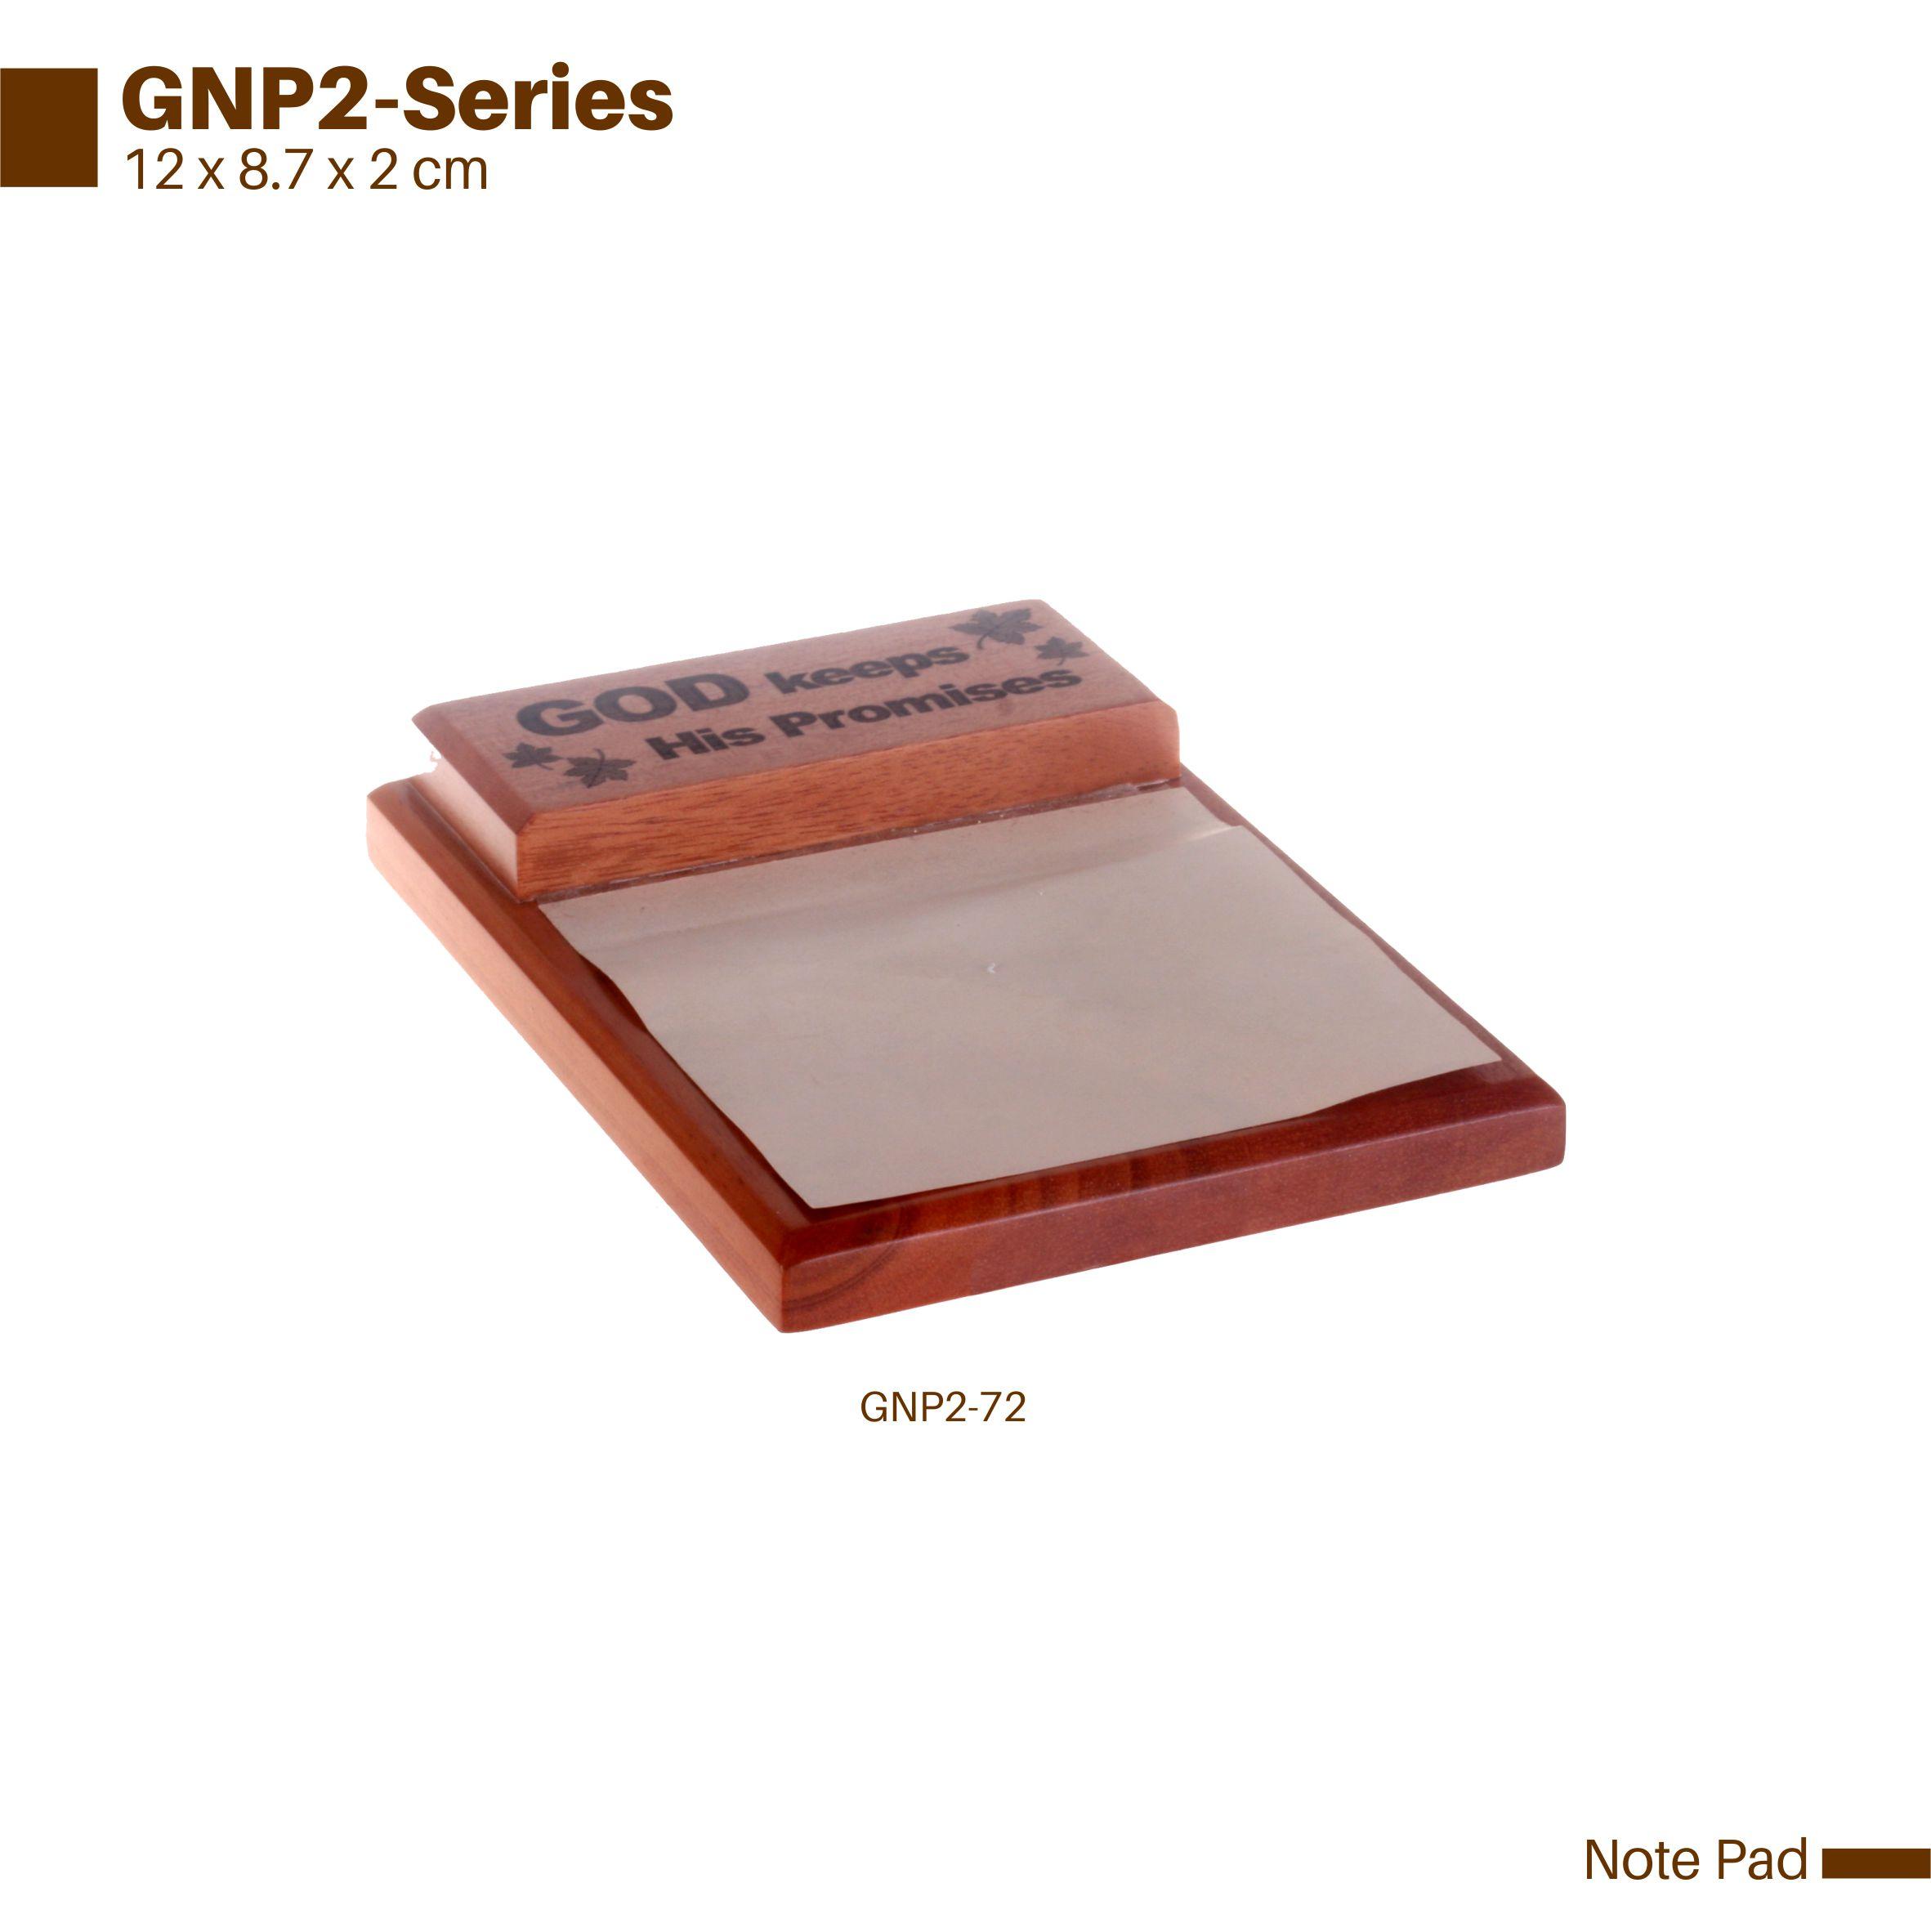 GNP2-Series